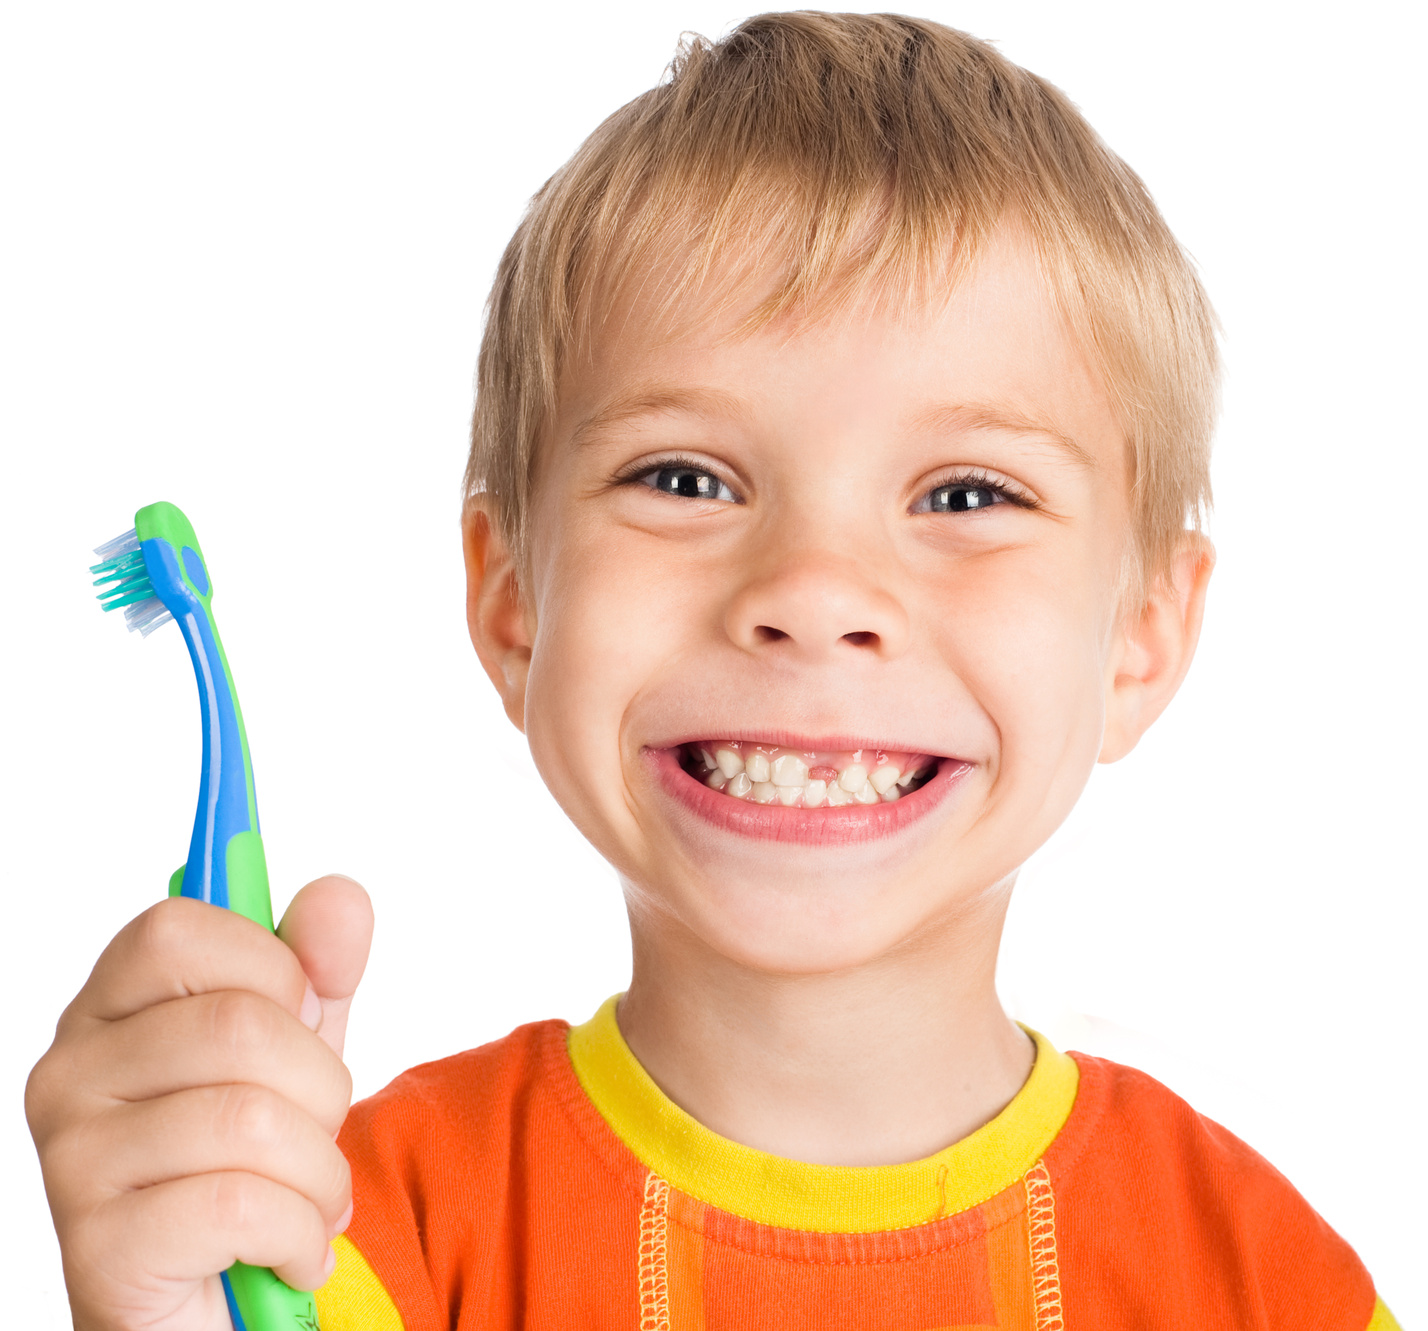 Chăm sóc răng sữa cho trẻ